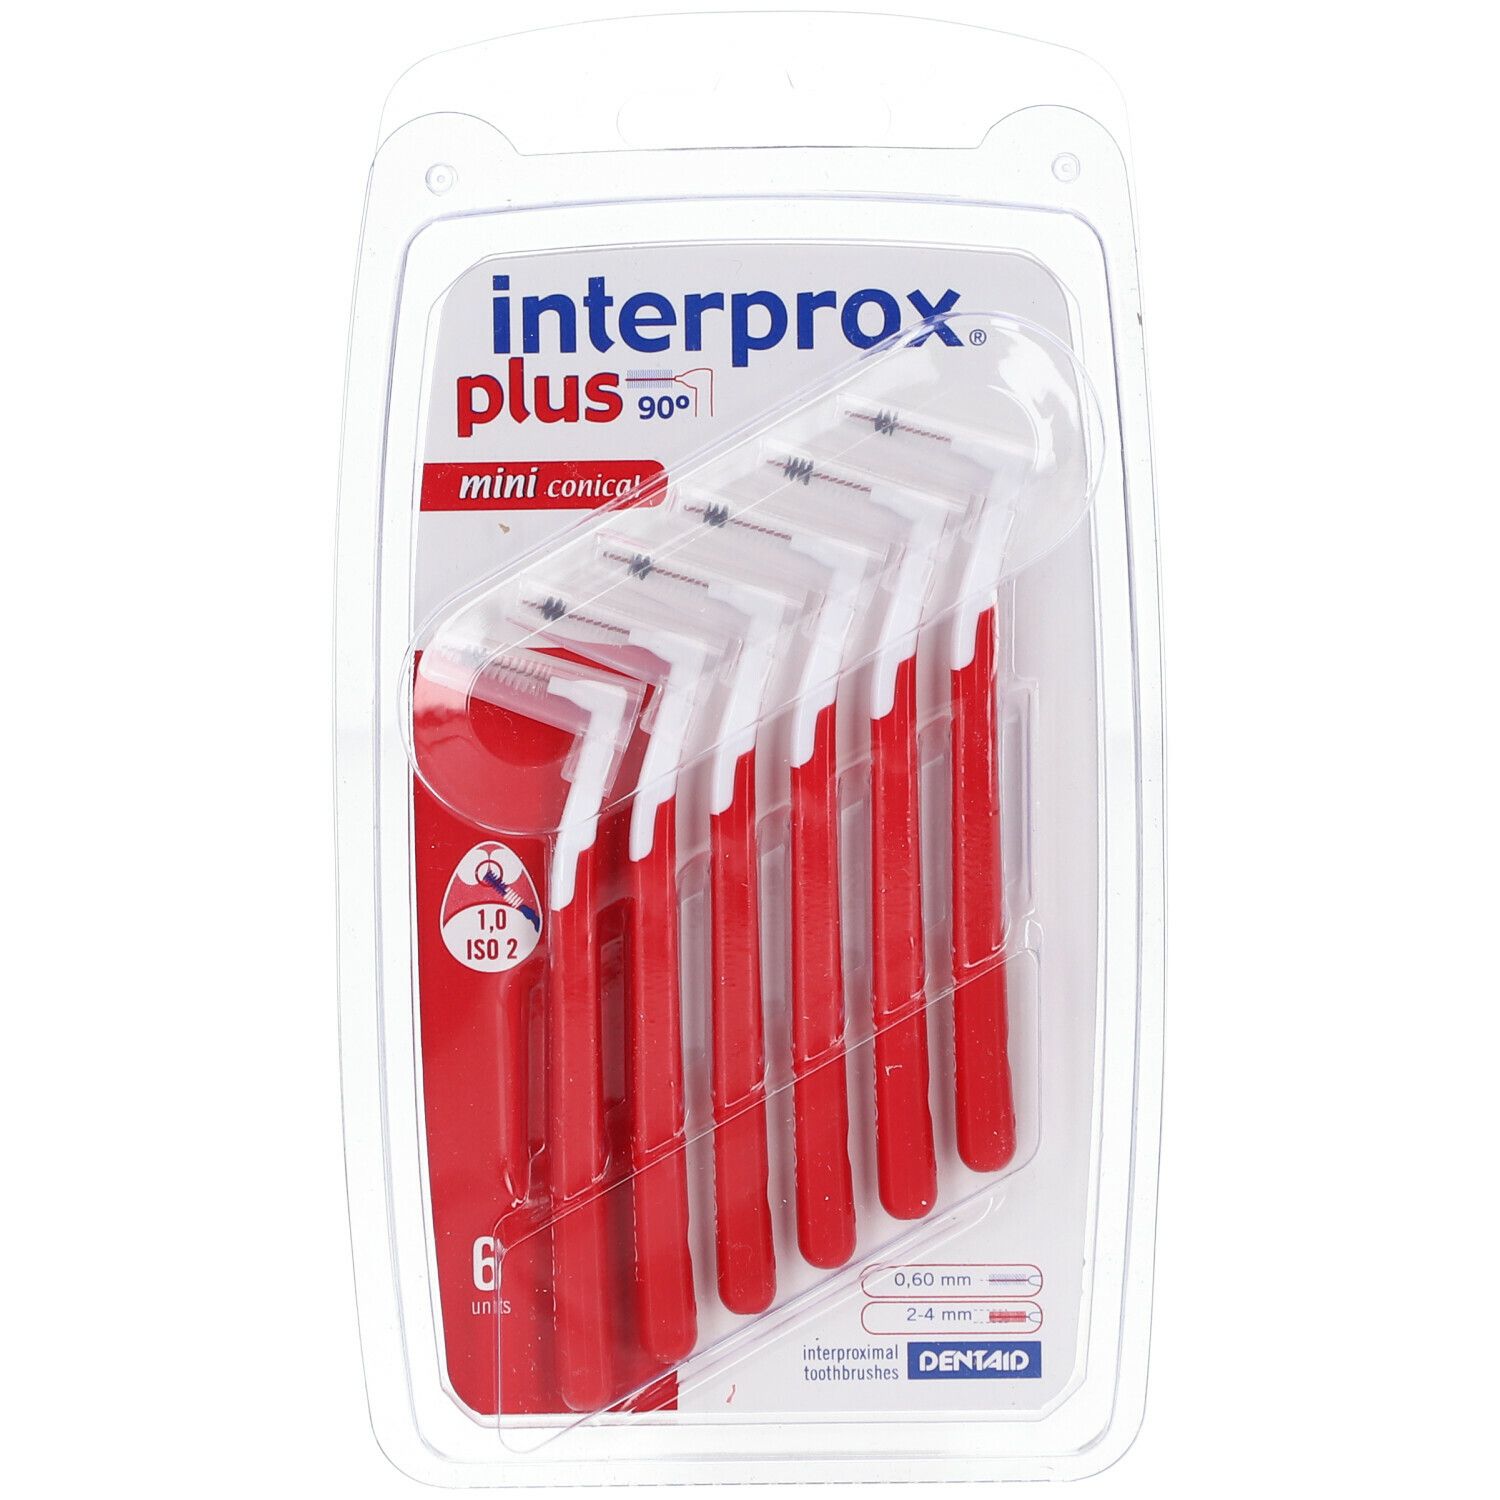 Interprox® Plus mini conical